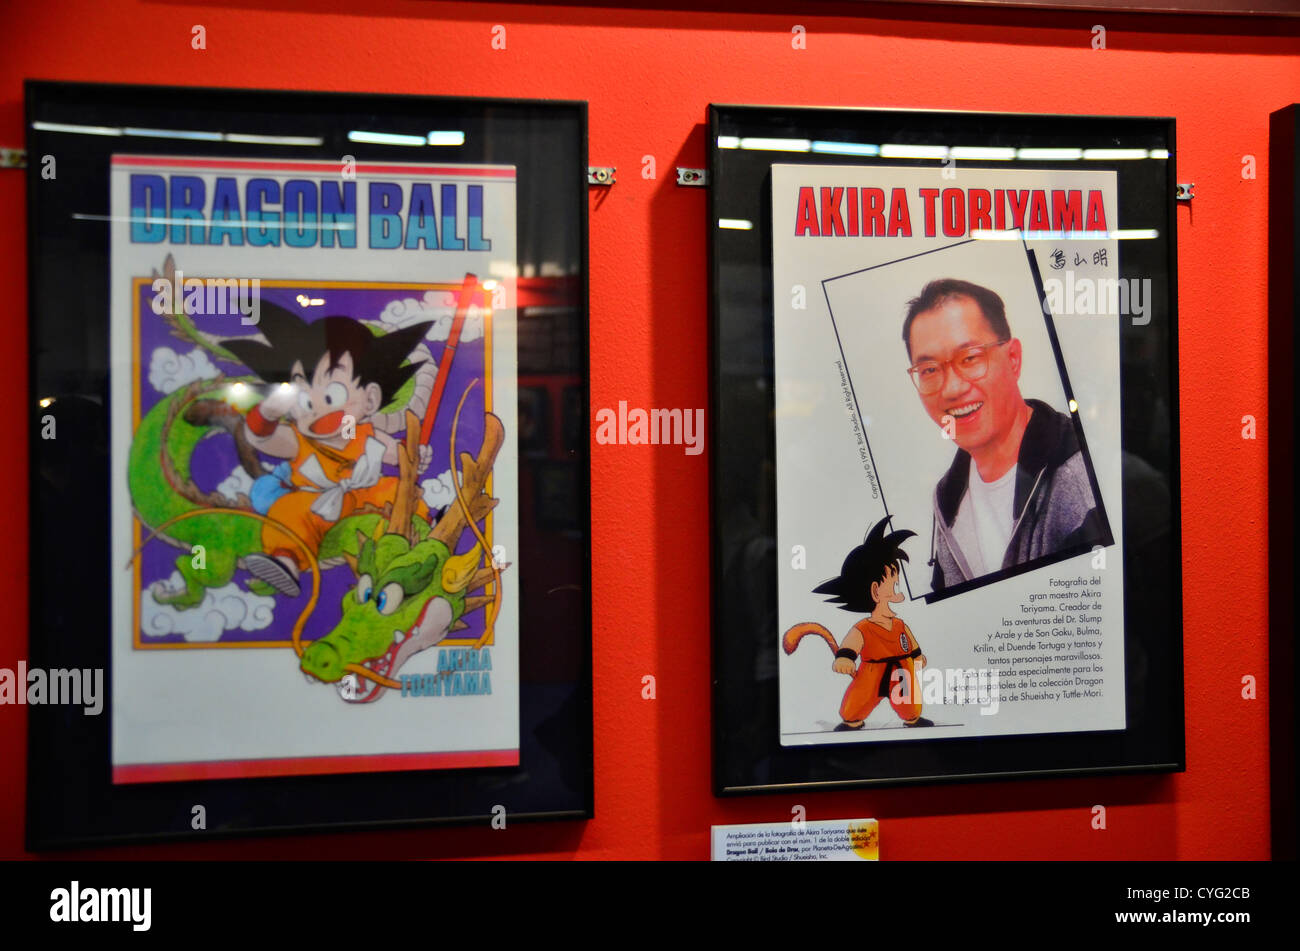 Dragon Ball in XVIII saló del Manga in Barcelona Stock Photo